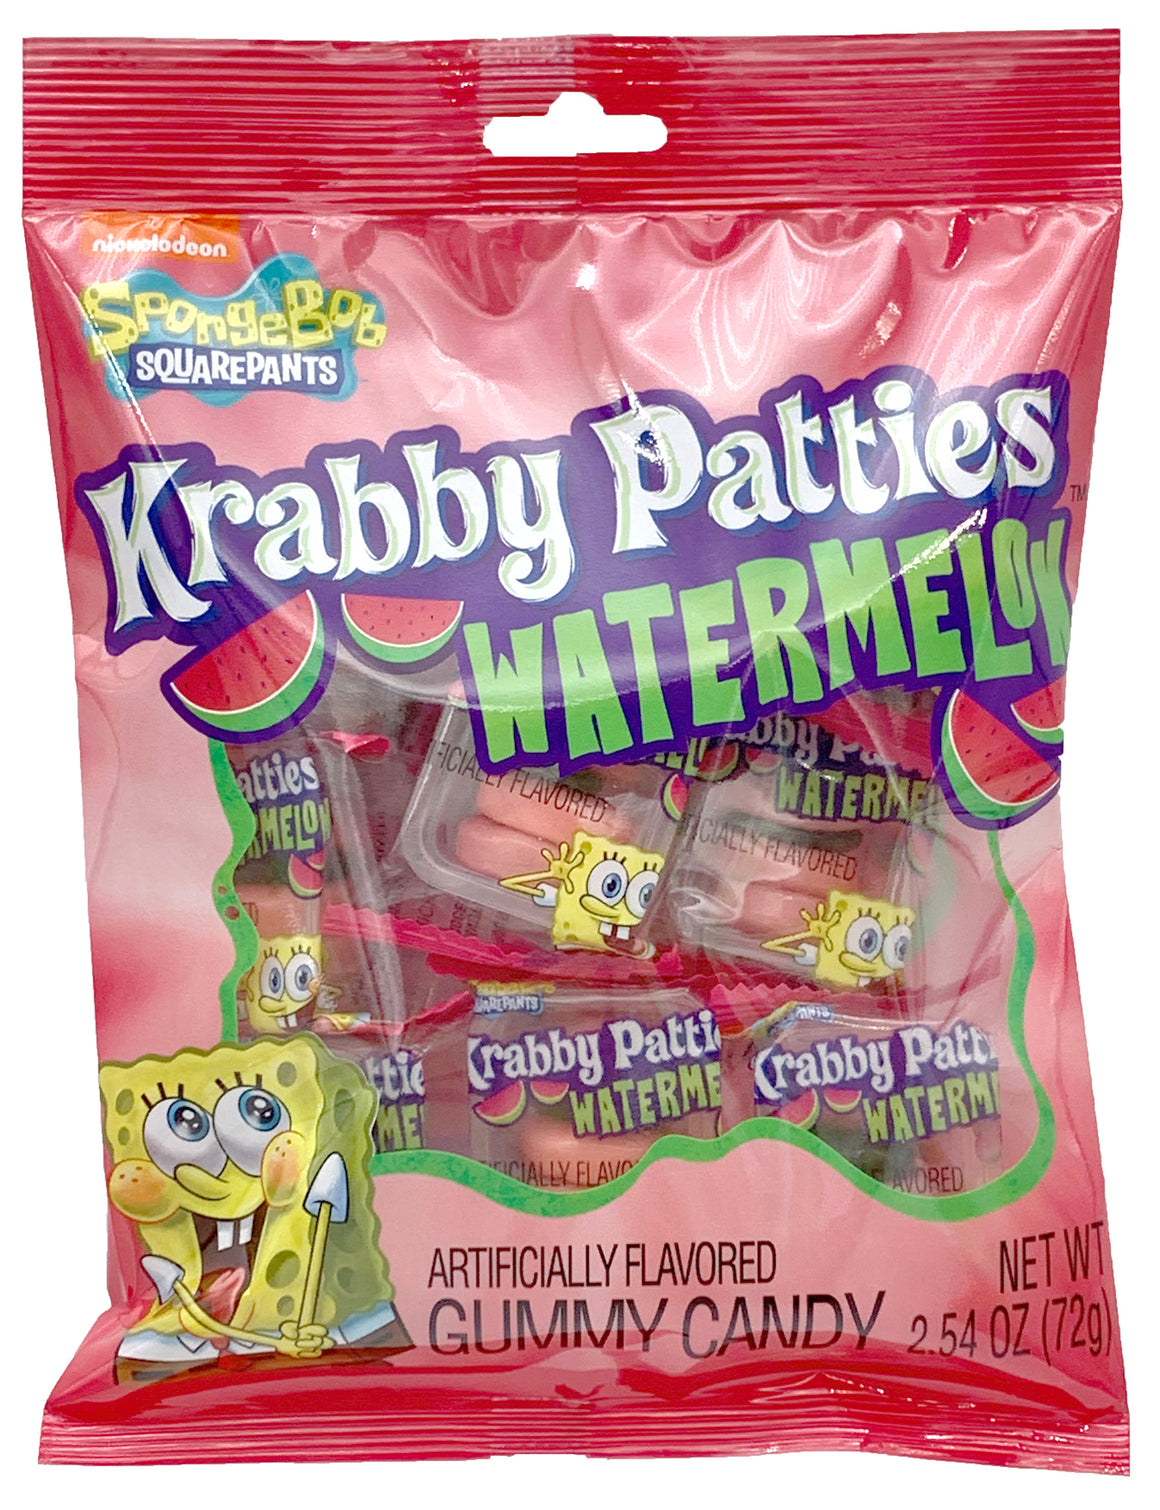 Spongebob Squarepants Watermelon Krabby Patties 2.54 oz Bag